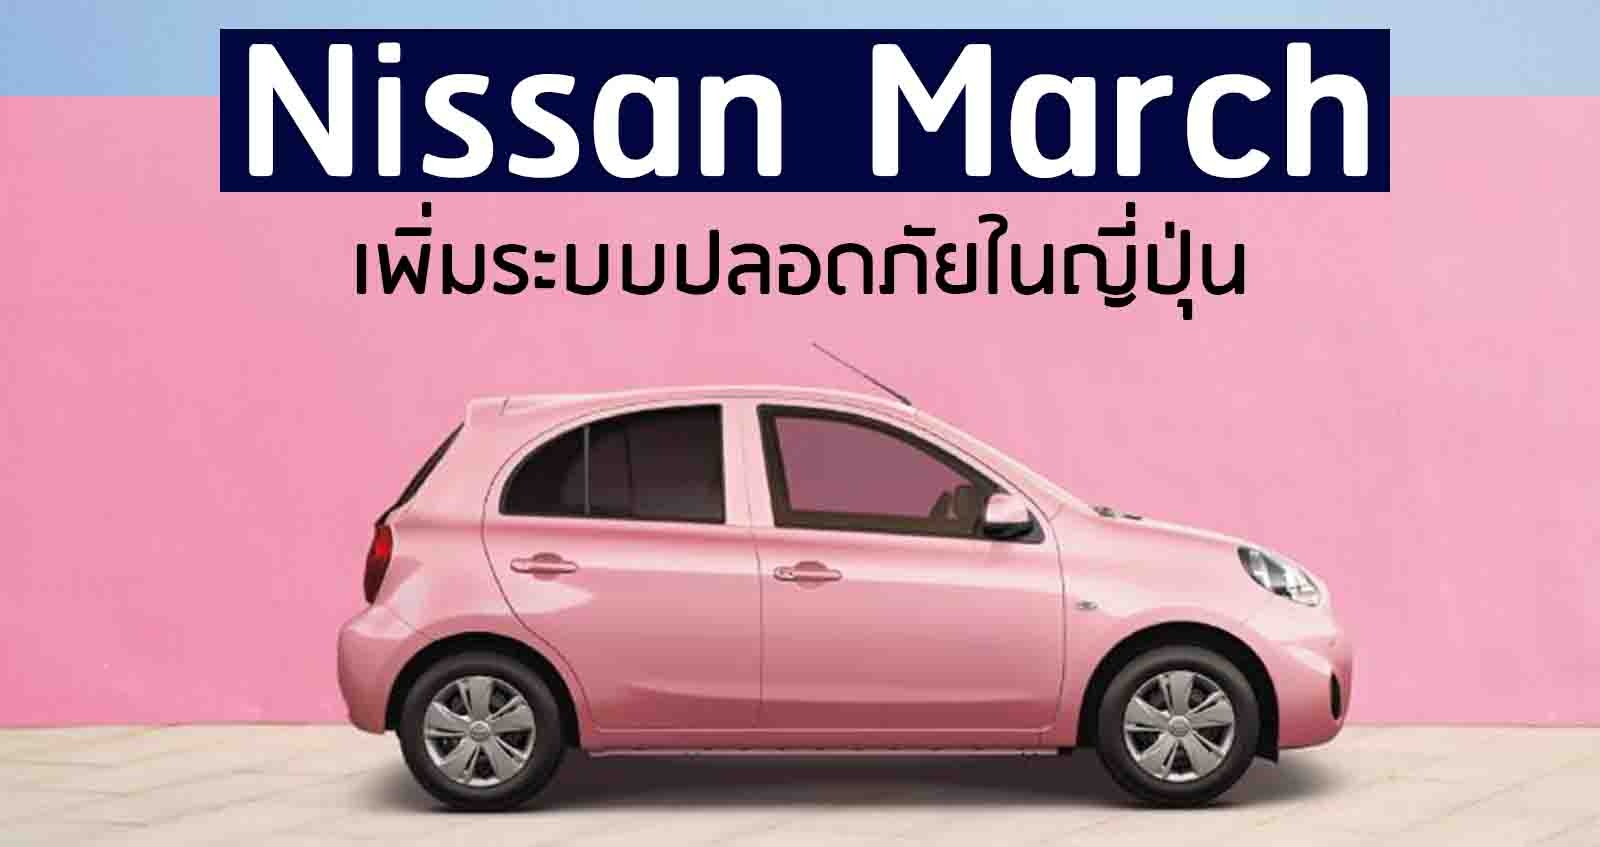 Nissan March เพิ่มระบบปลอดภัยในญี่ปุ่น ดีไซน์เดิมๆ